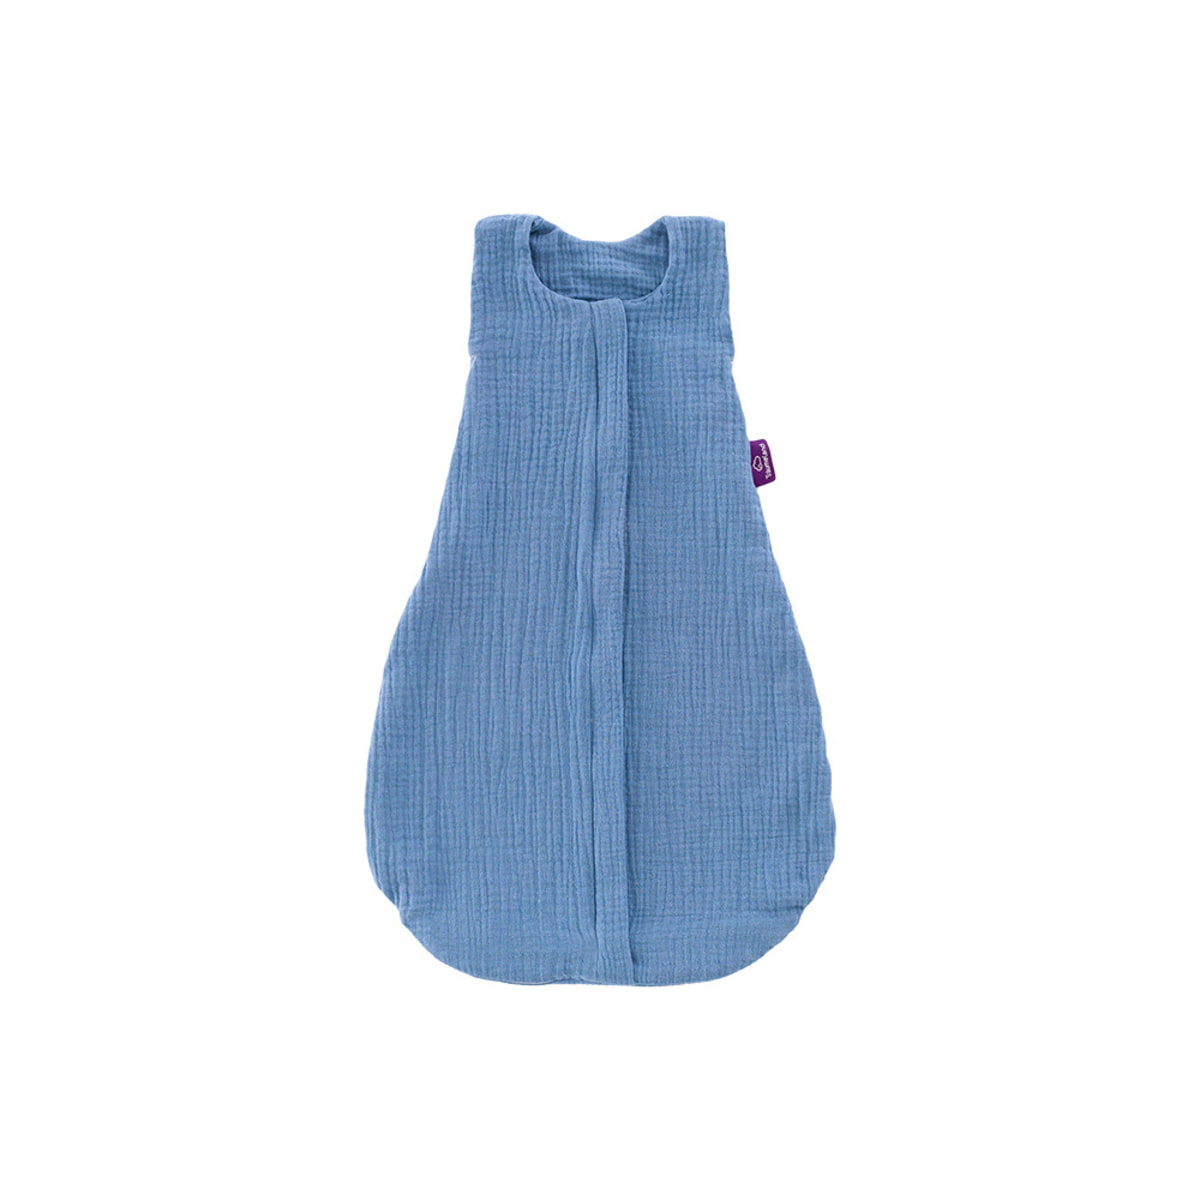 summer sleeping bag made out of cotton muslin in light blue